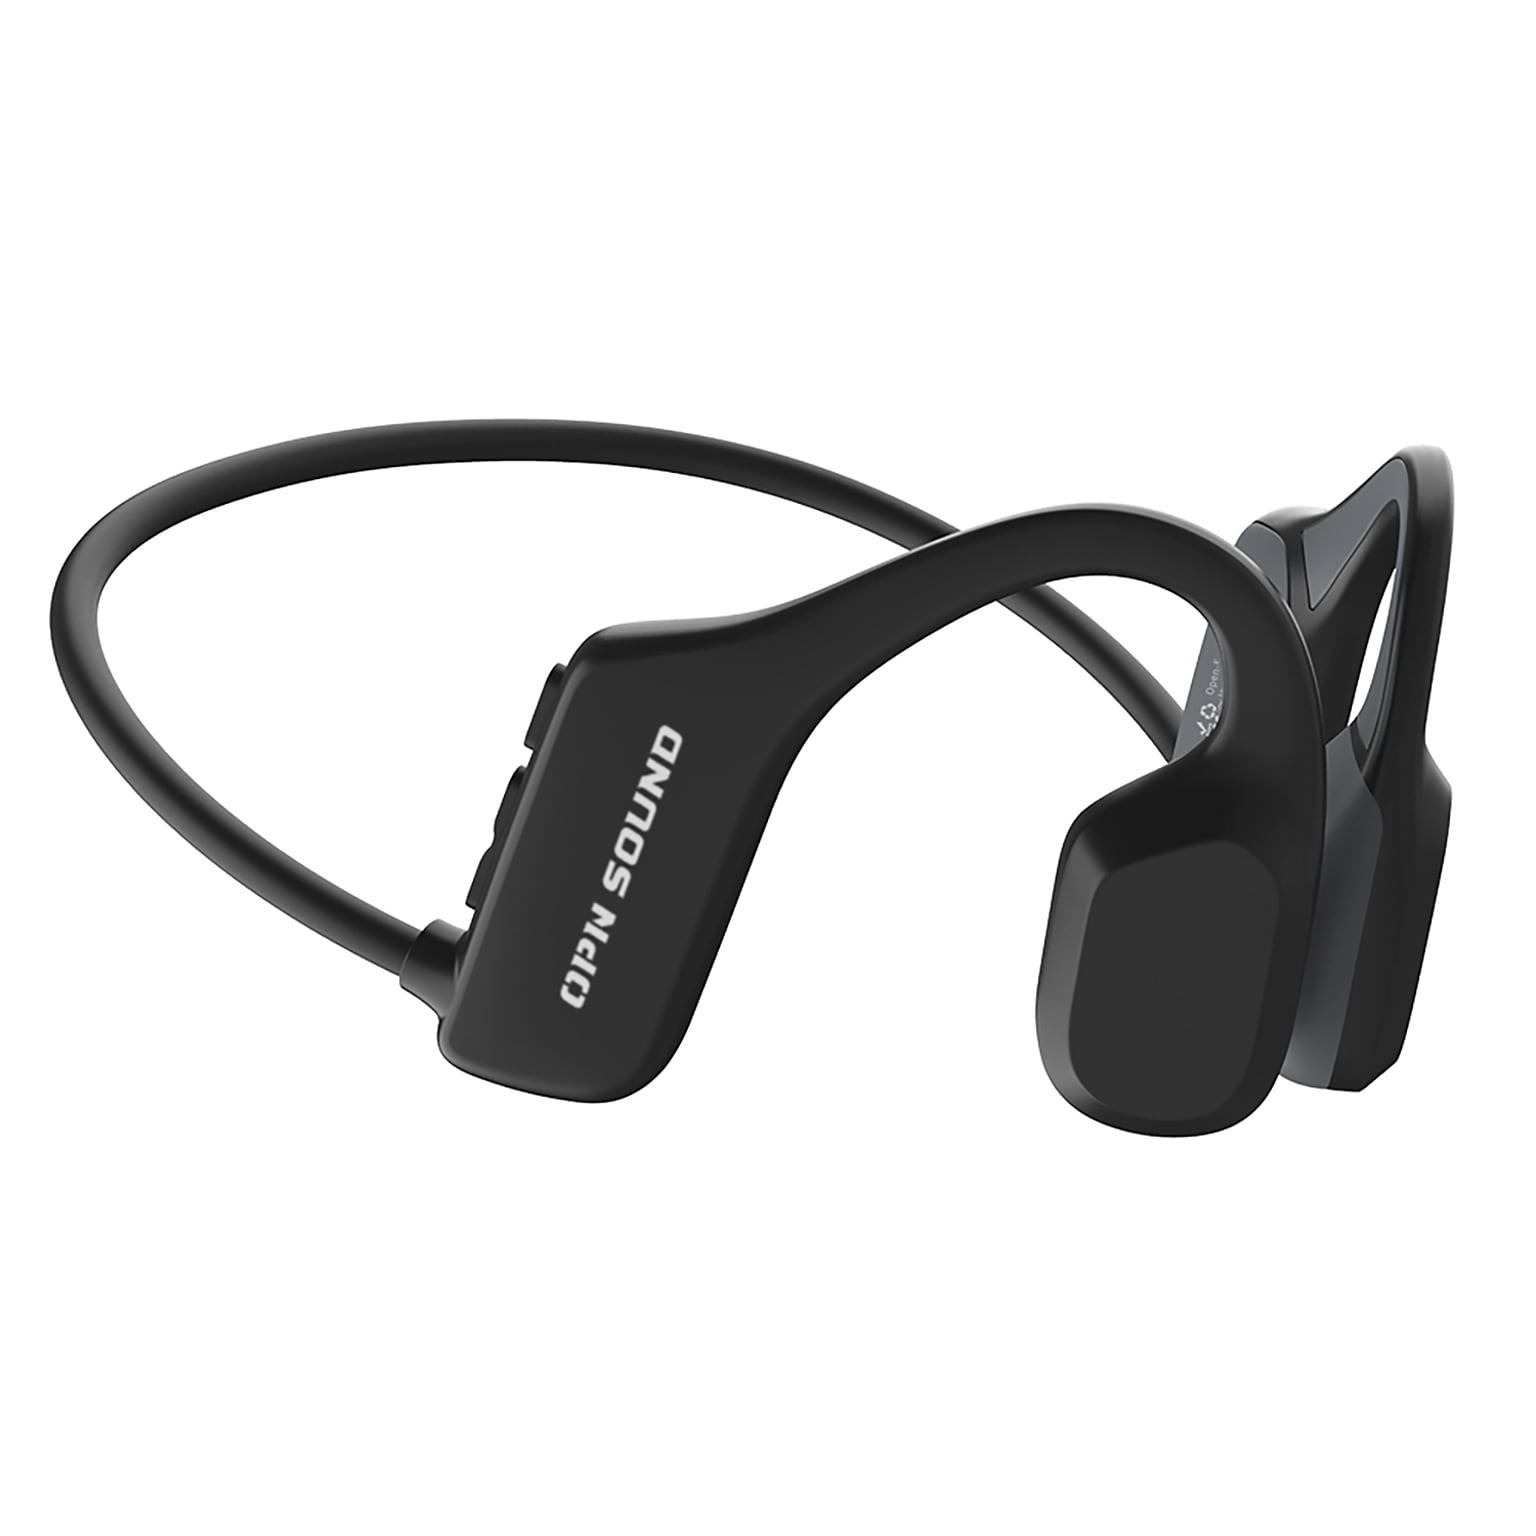 OPN Sound Mezzo Wireless Bluetooth Bone-Conduction Neckband Headphones with Microphone, Black (OS2000BK)